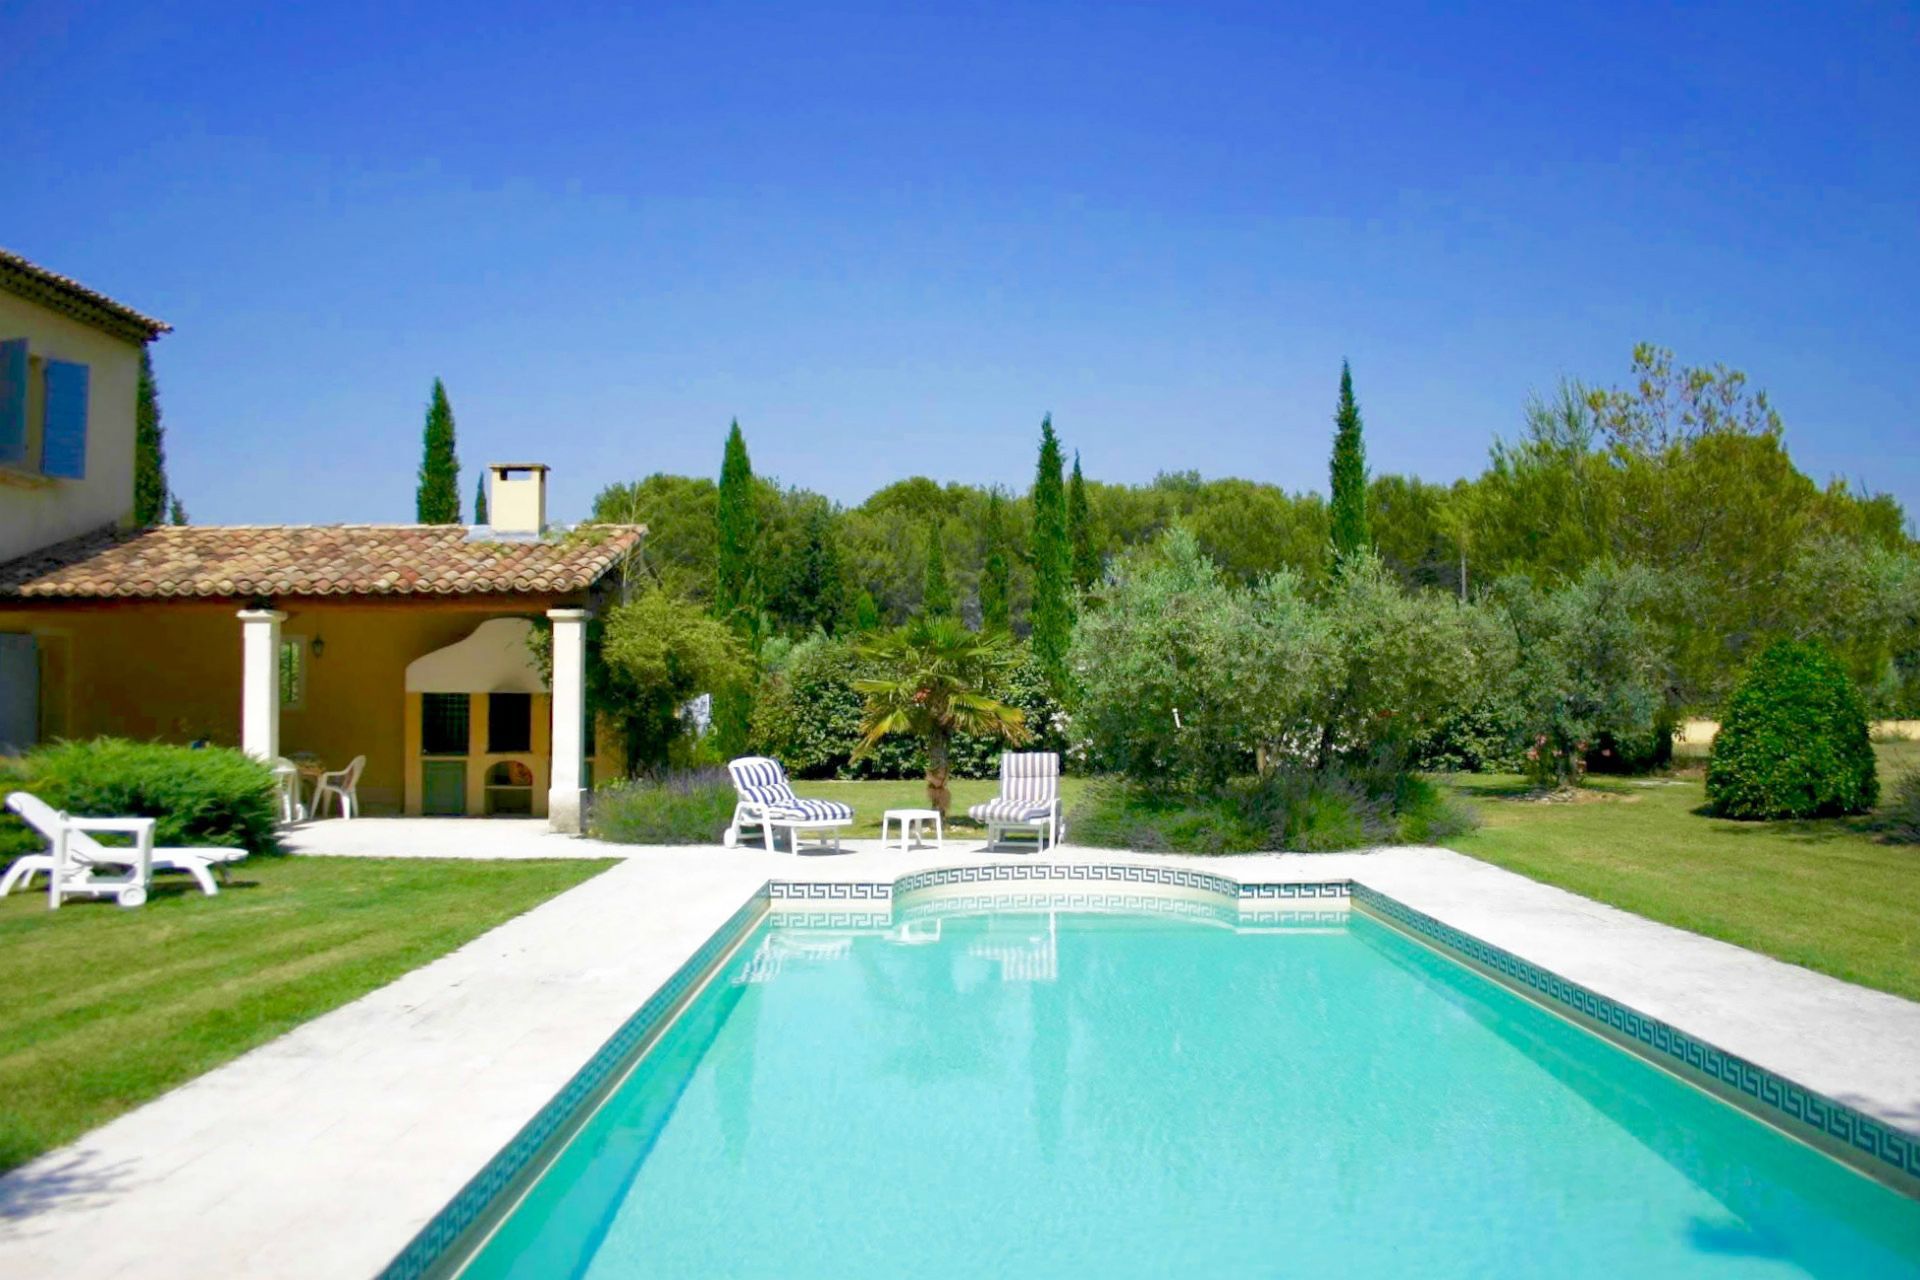 Méditerranée Location Mas with Private pool in St Rémy de Provence, Provence